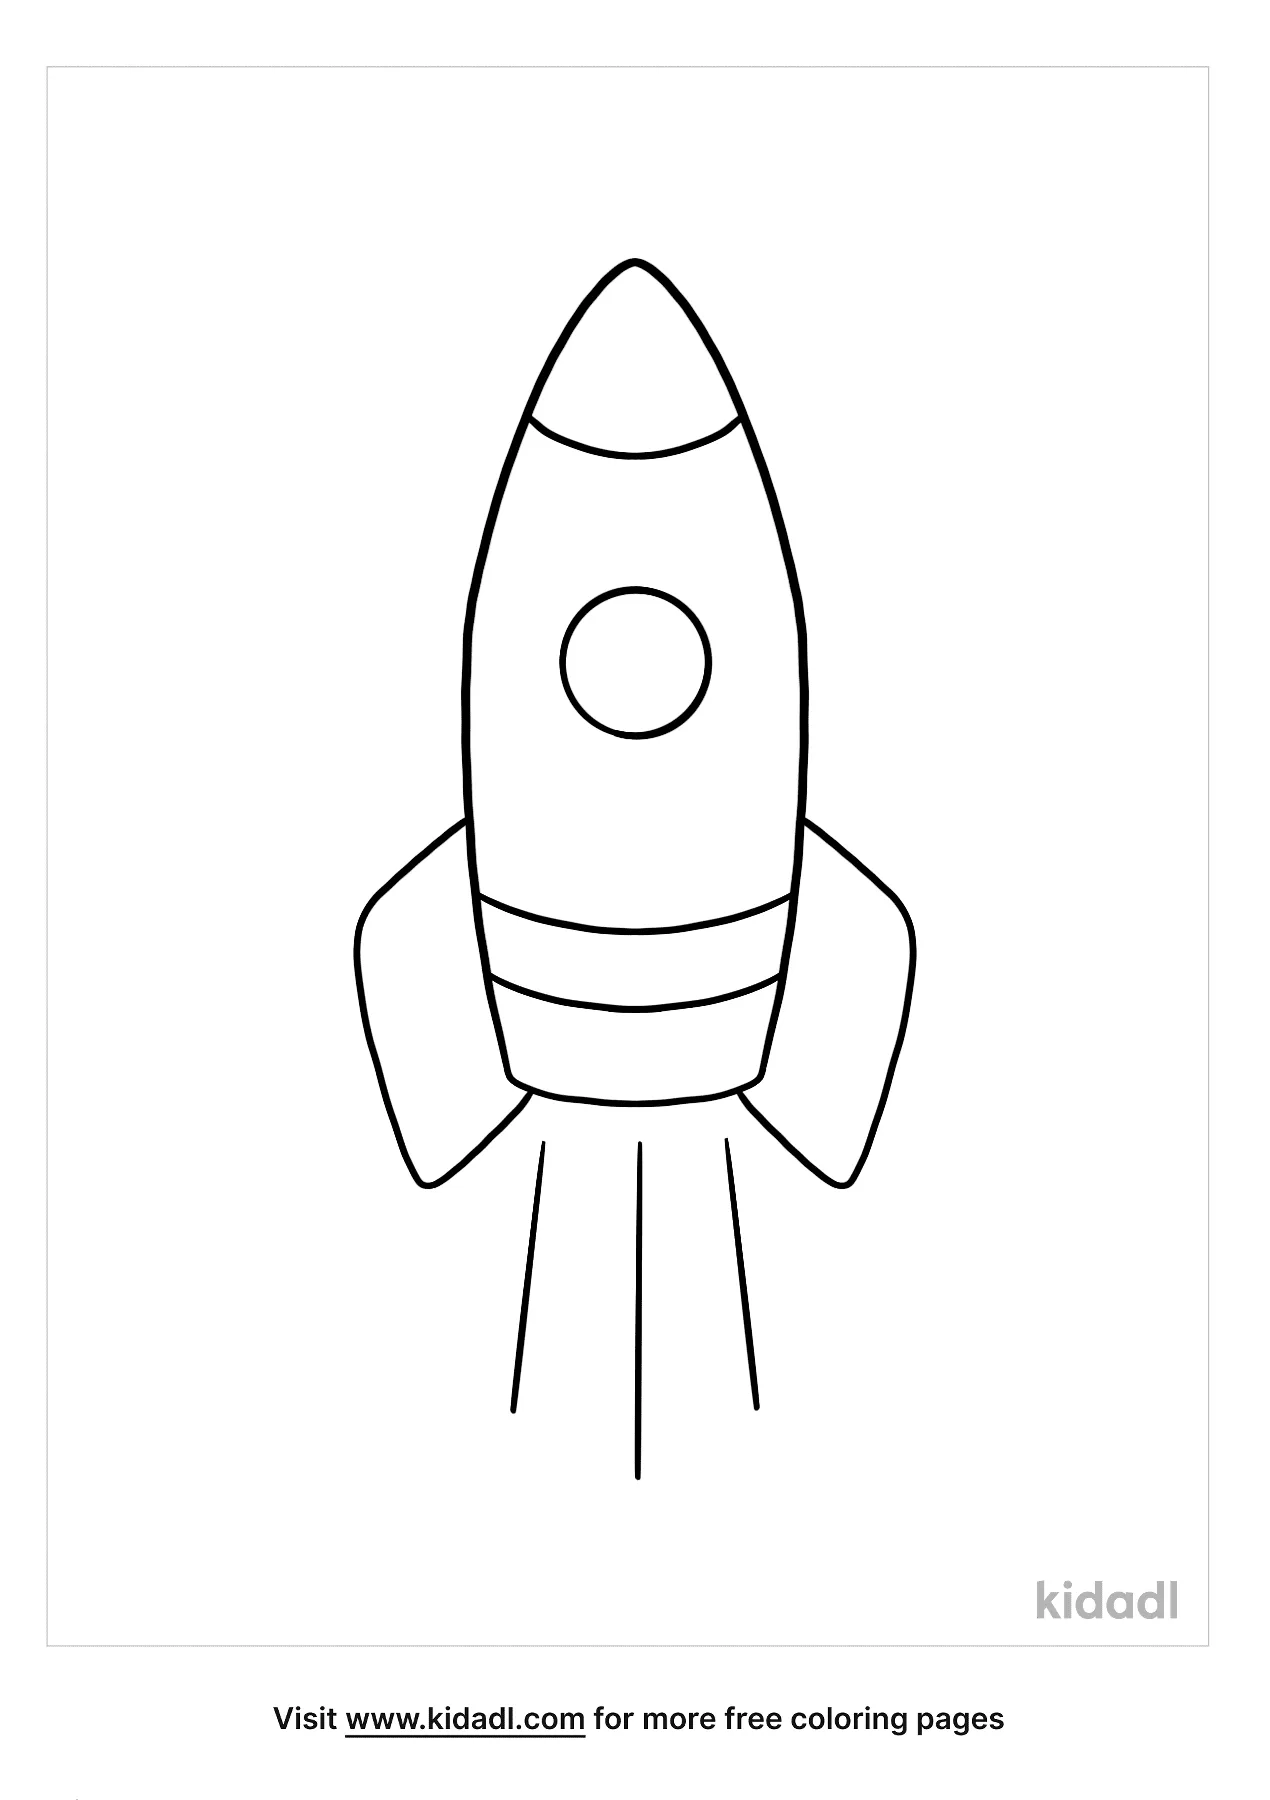 Free Basic Spaceship Coloring Page | Coloring Page Printables | Kidadl